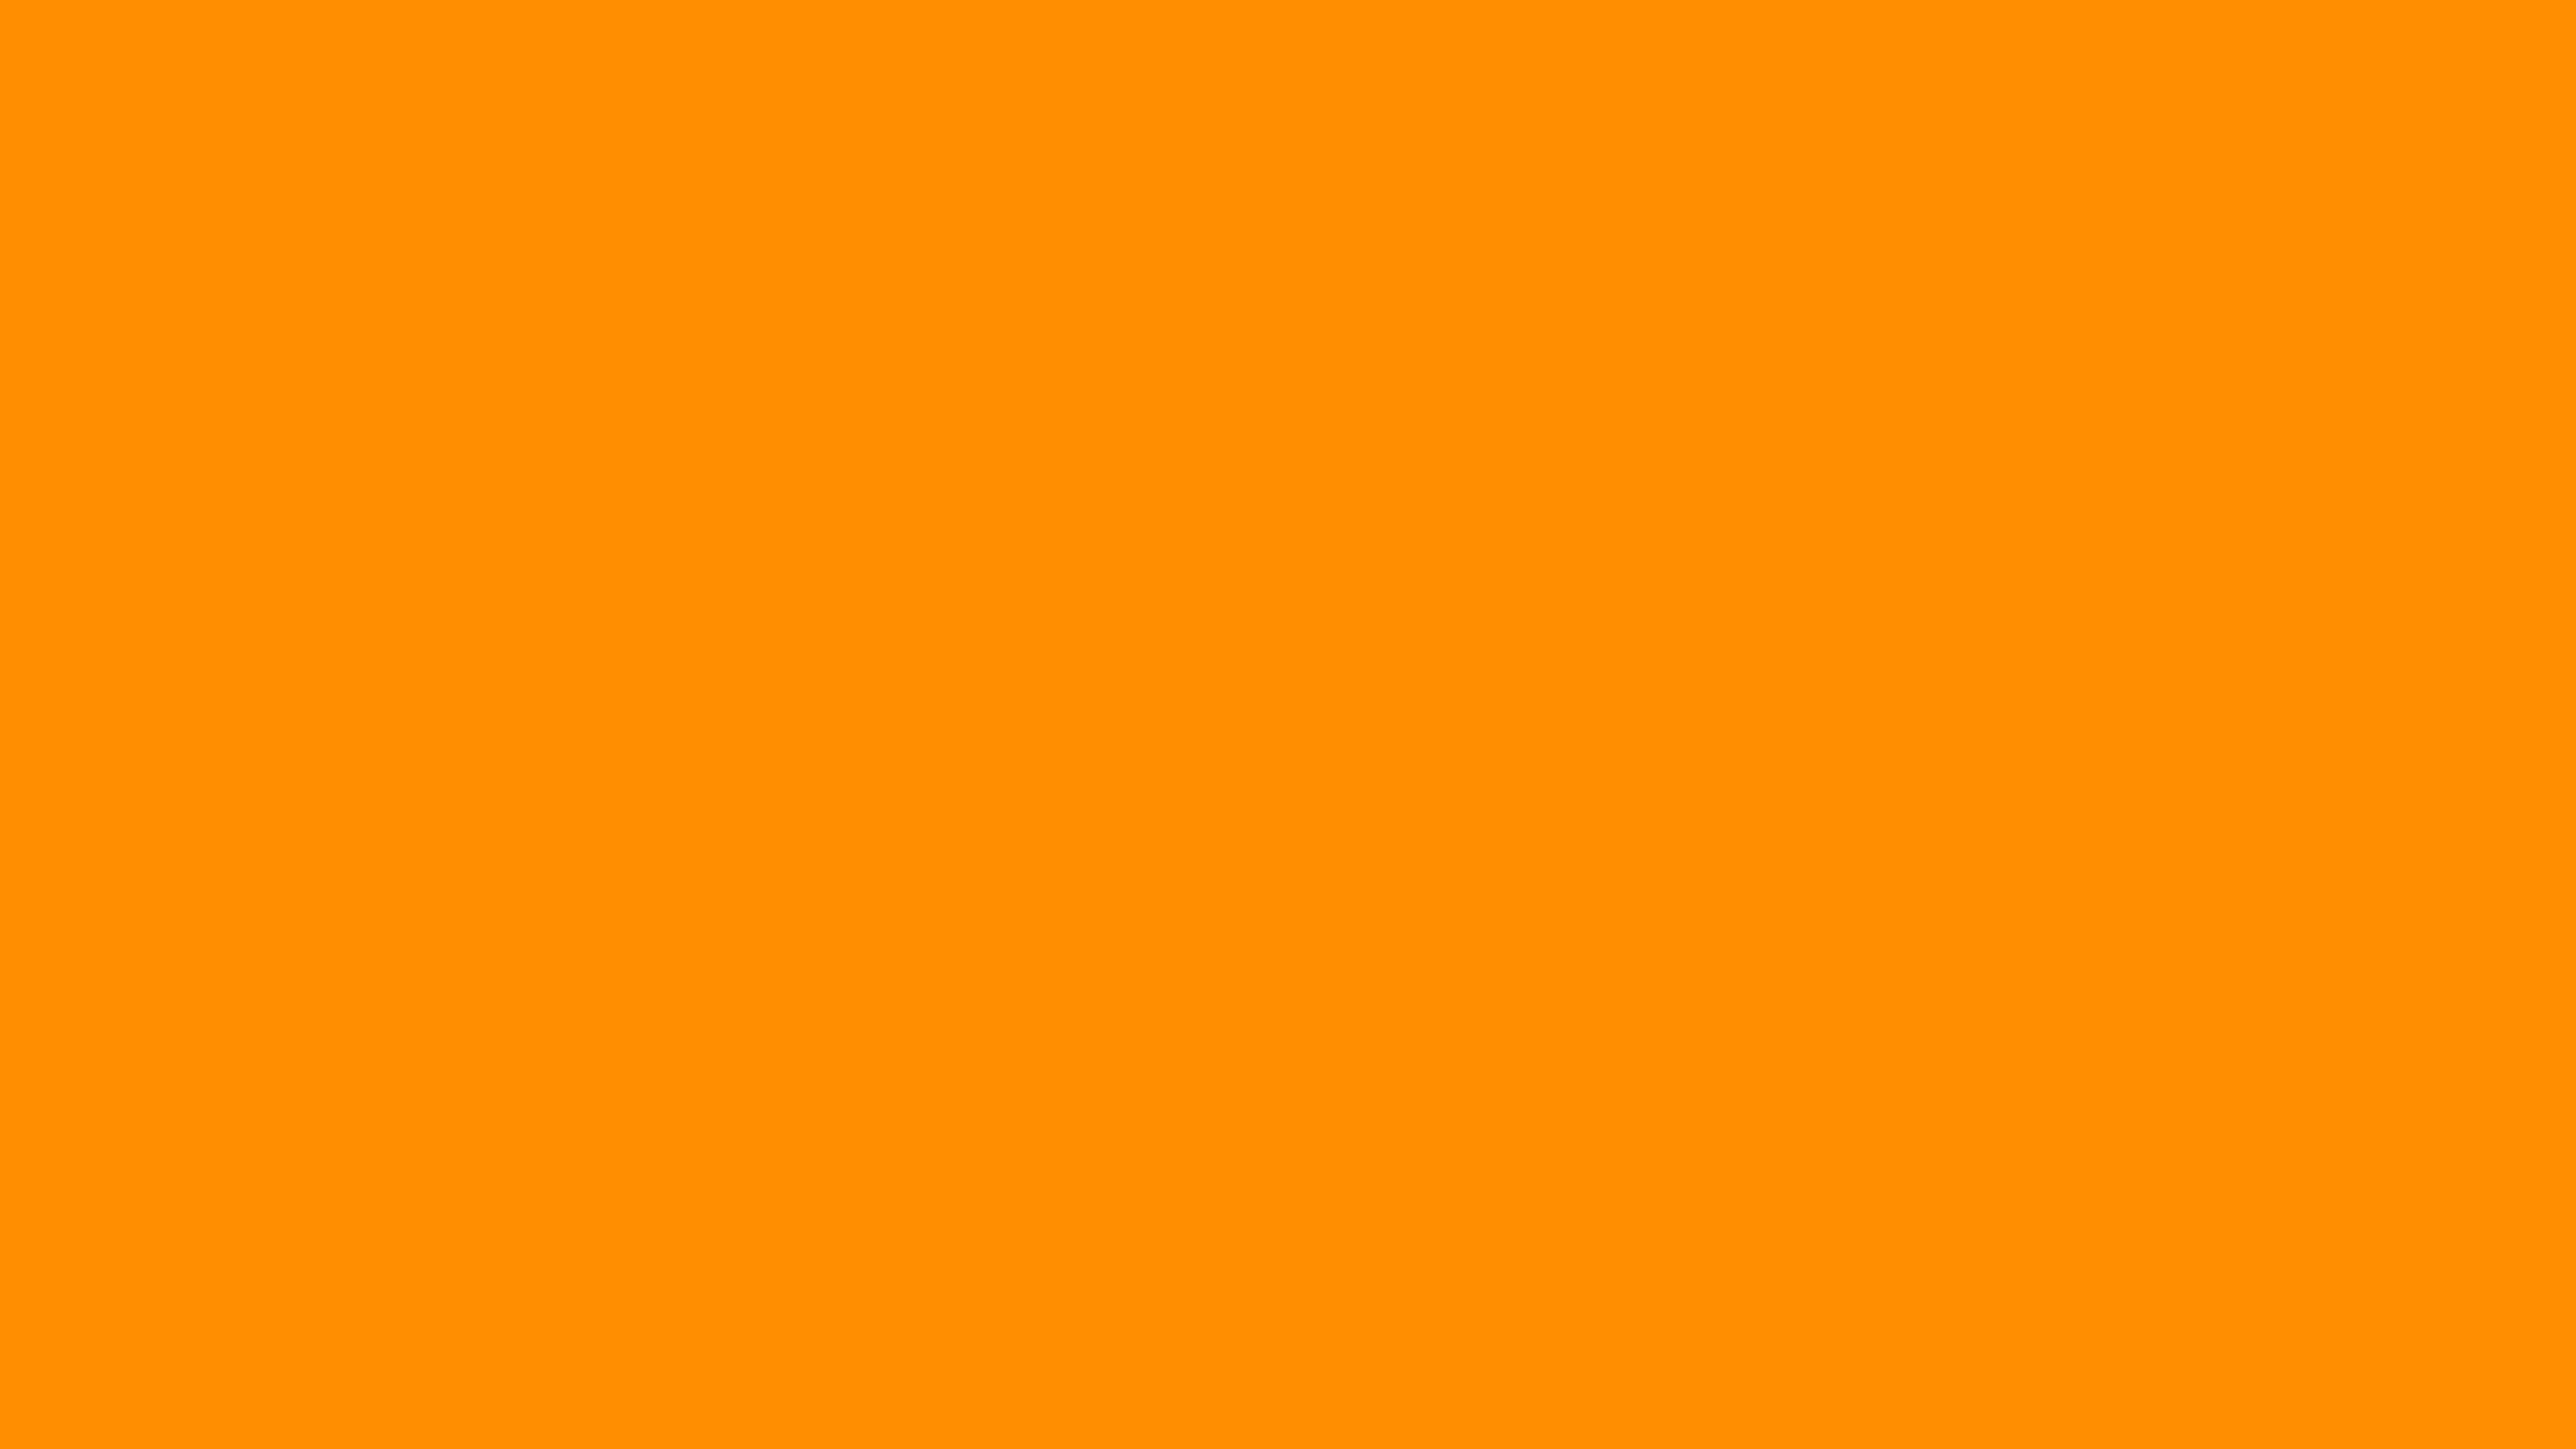 7680x4320 Princeton Orange Solid Color Background